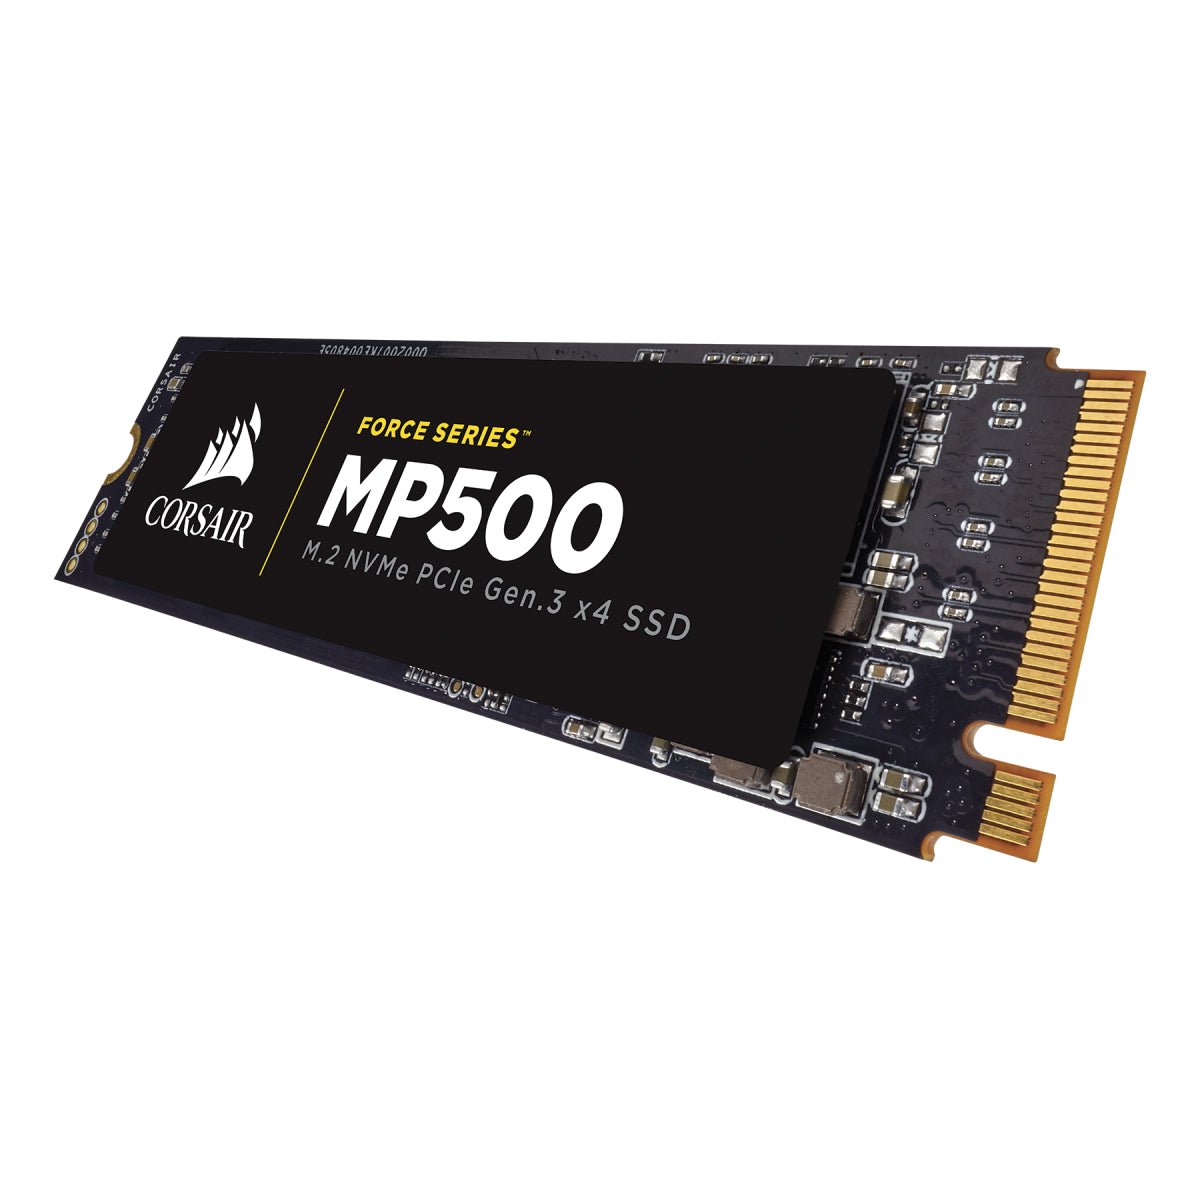 Corsair MP500 Force Series 240GB Internal PCI-E M.2 - Store 974 | ستور ٩٧٤